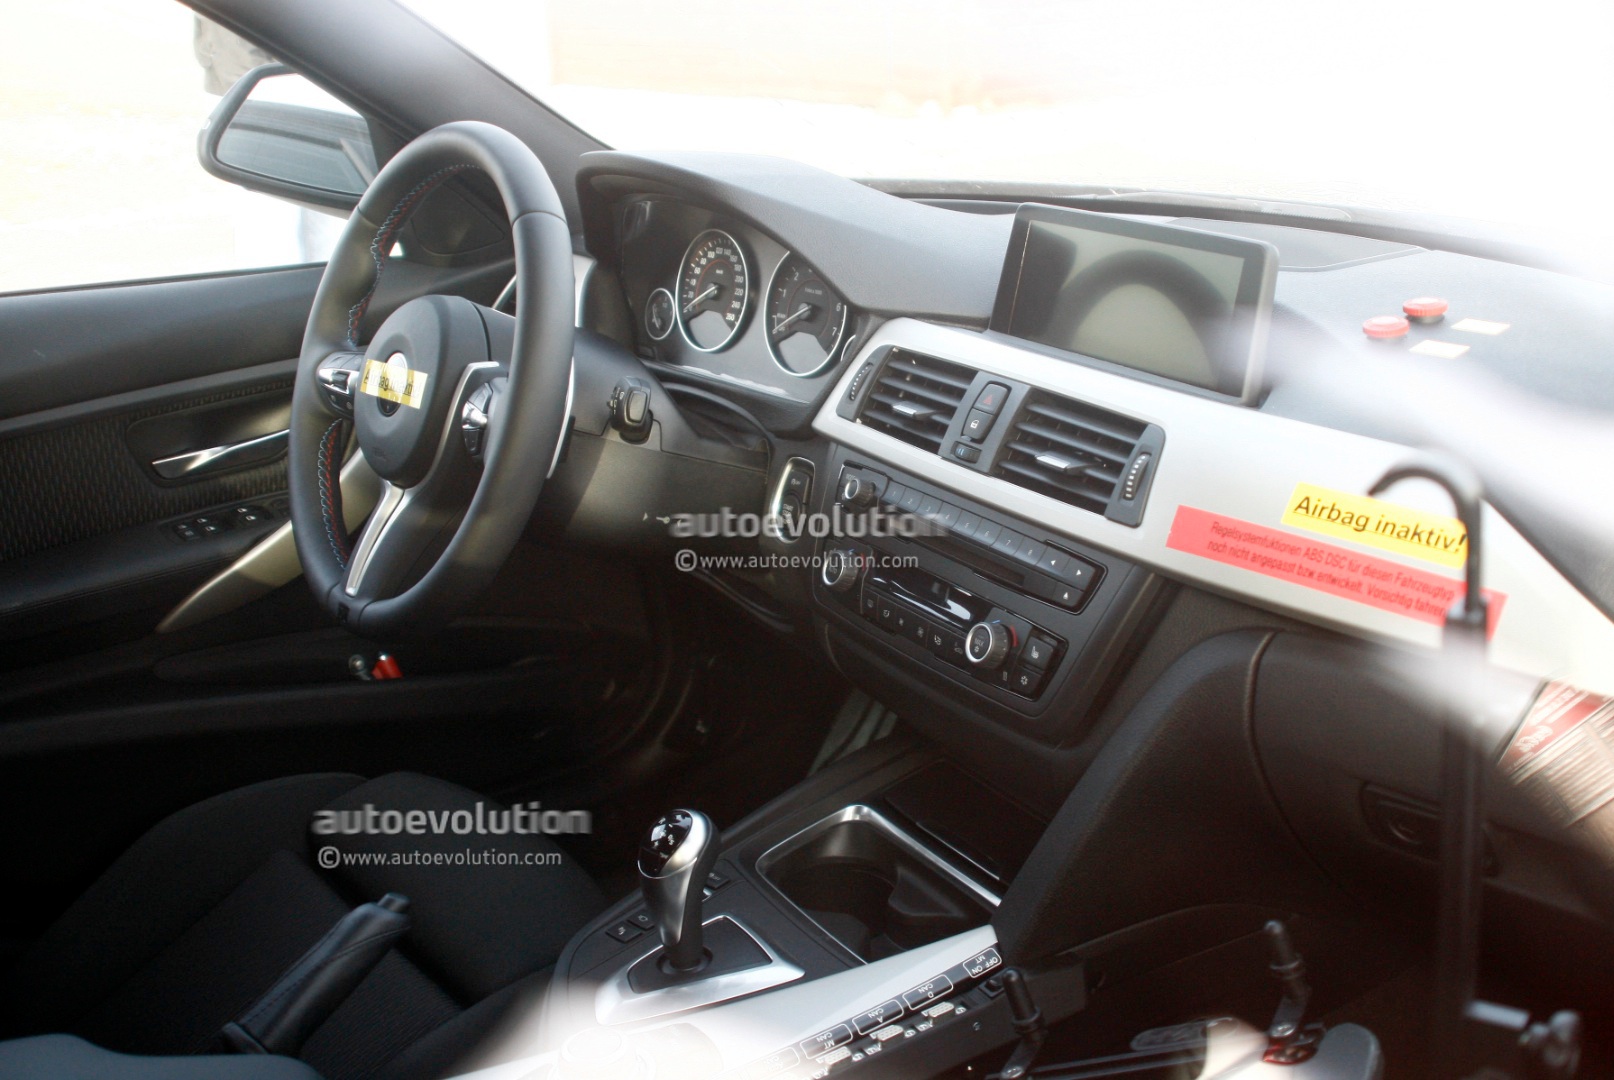 2014 F80 BMW M3 interior